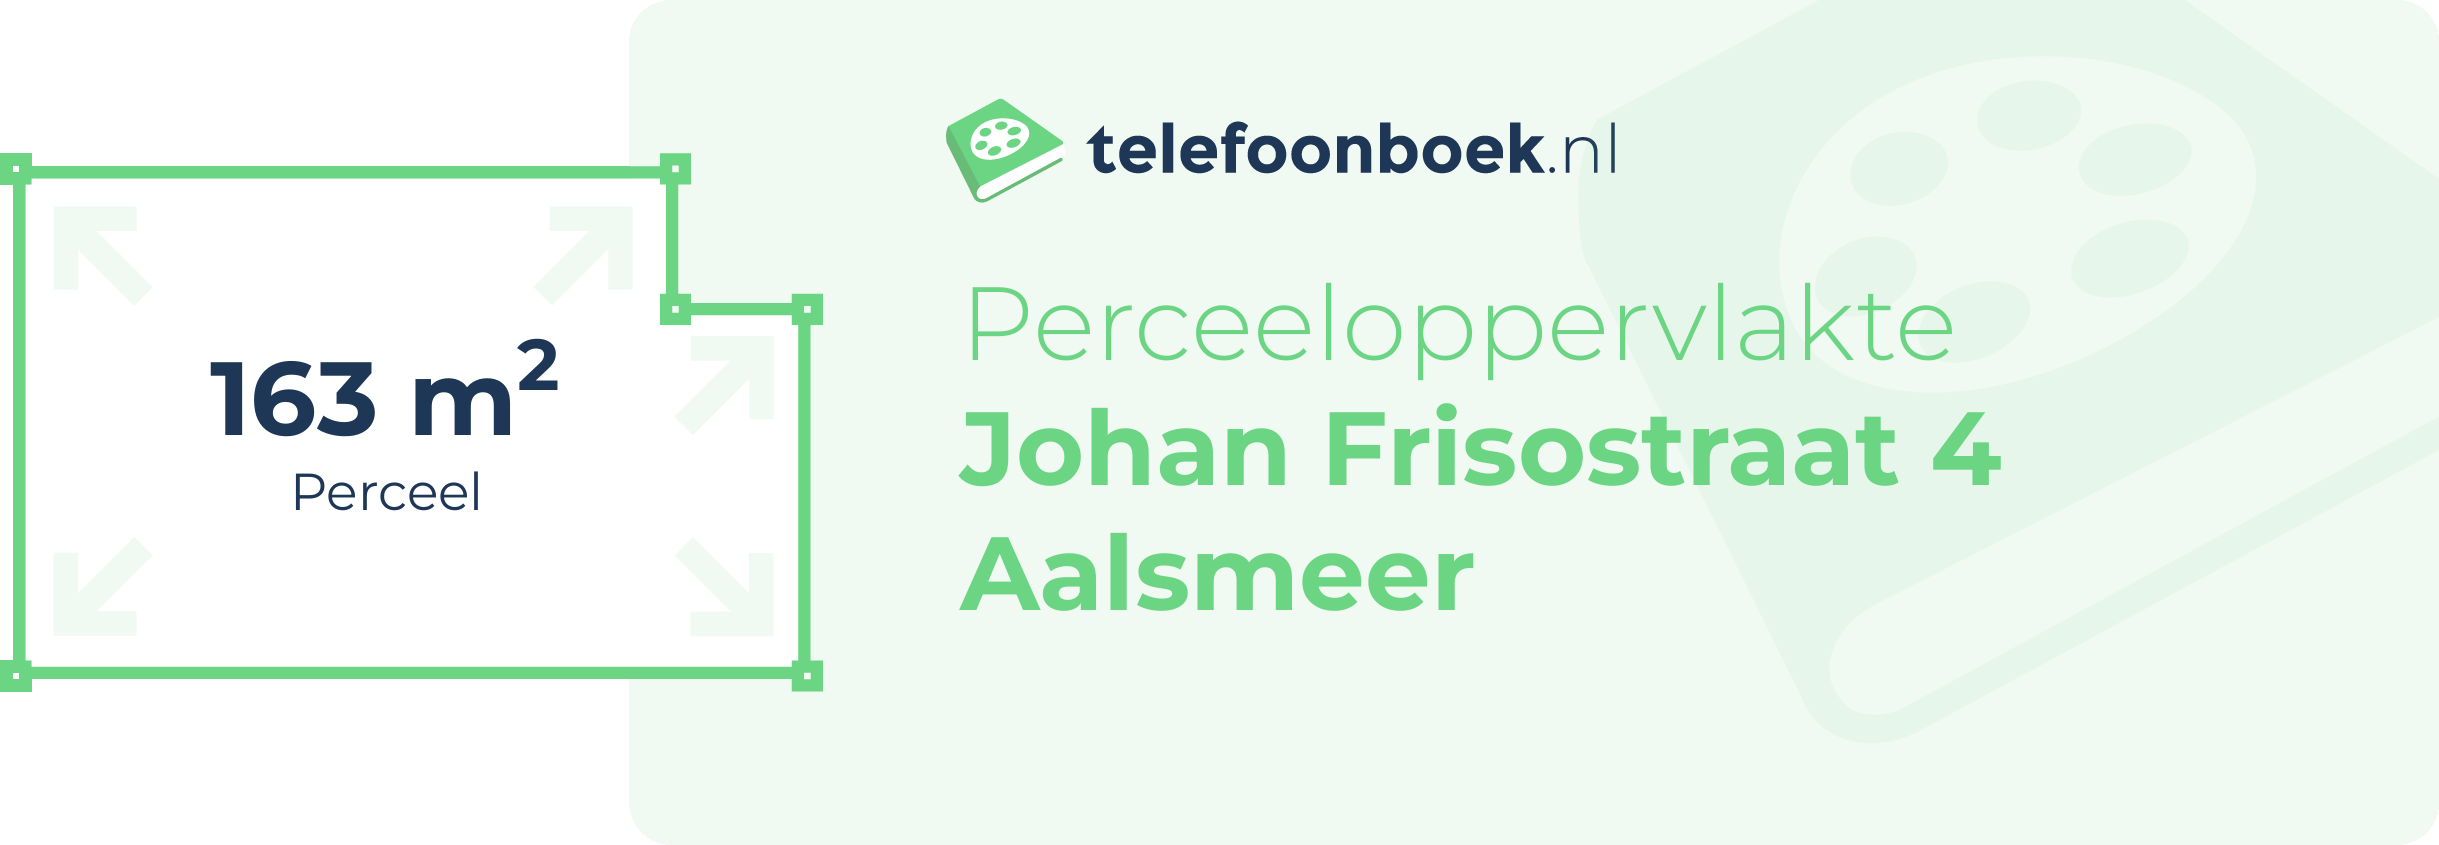 Perceeloppervlakte Johan Frisostraat 4 Aalsmeer